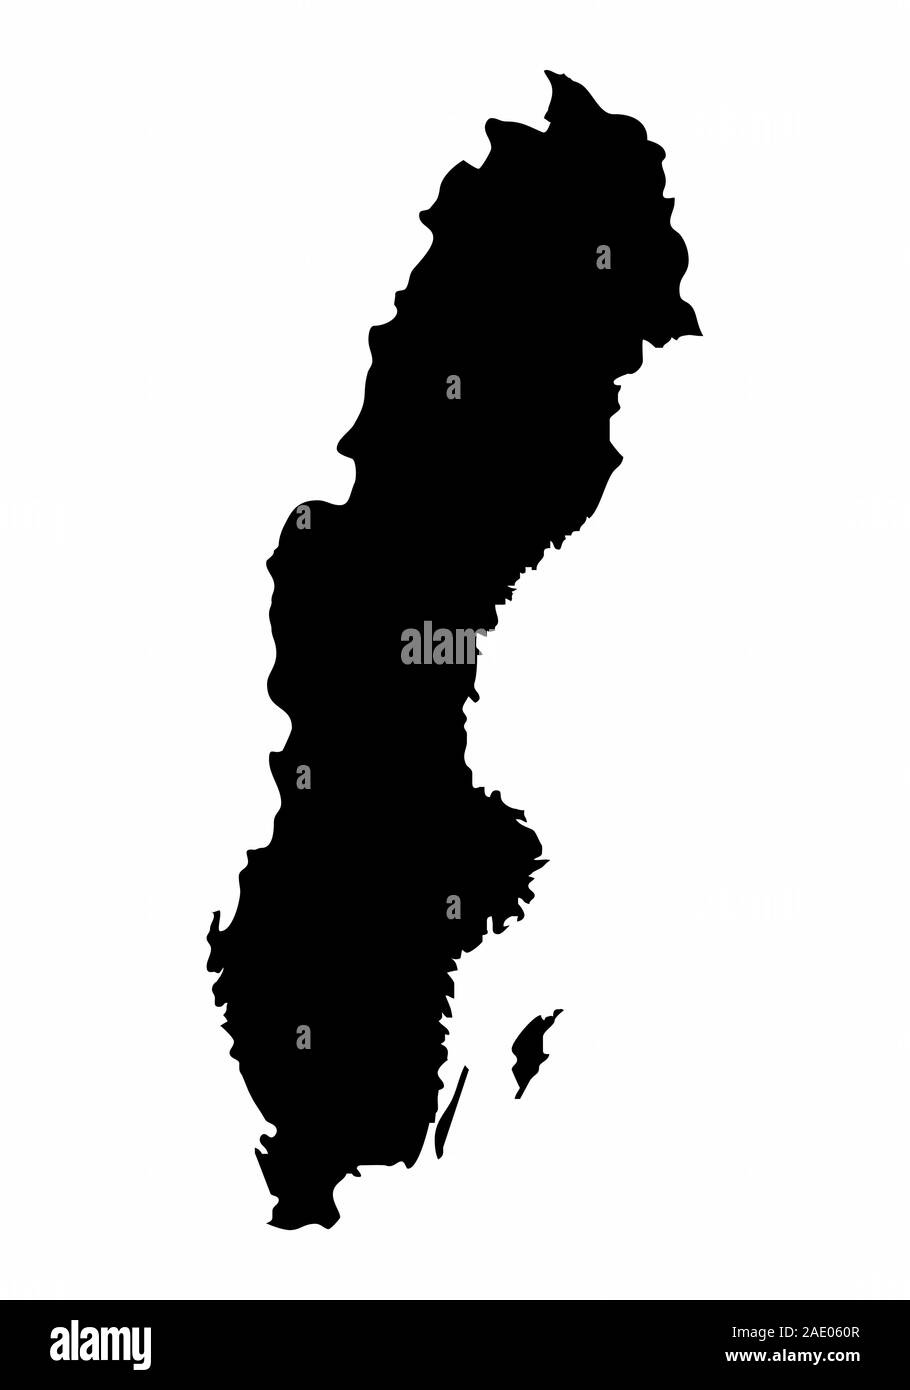 Sweden silhouette map Stock Vector